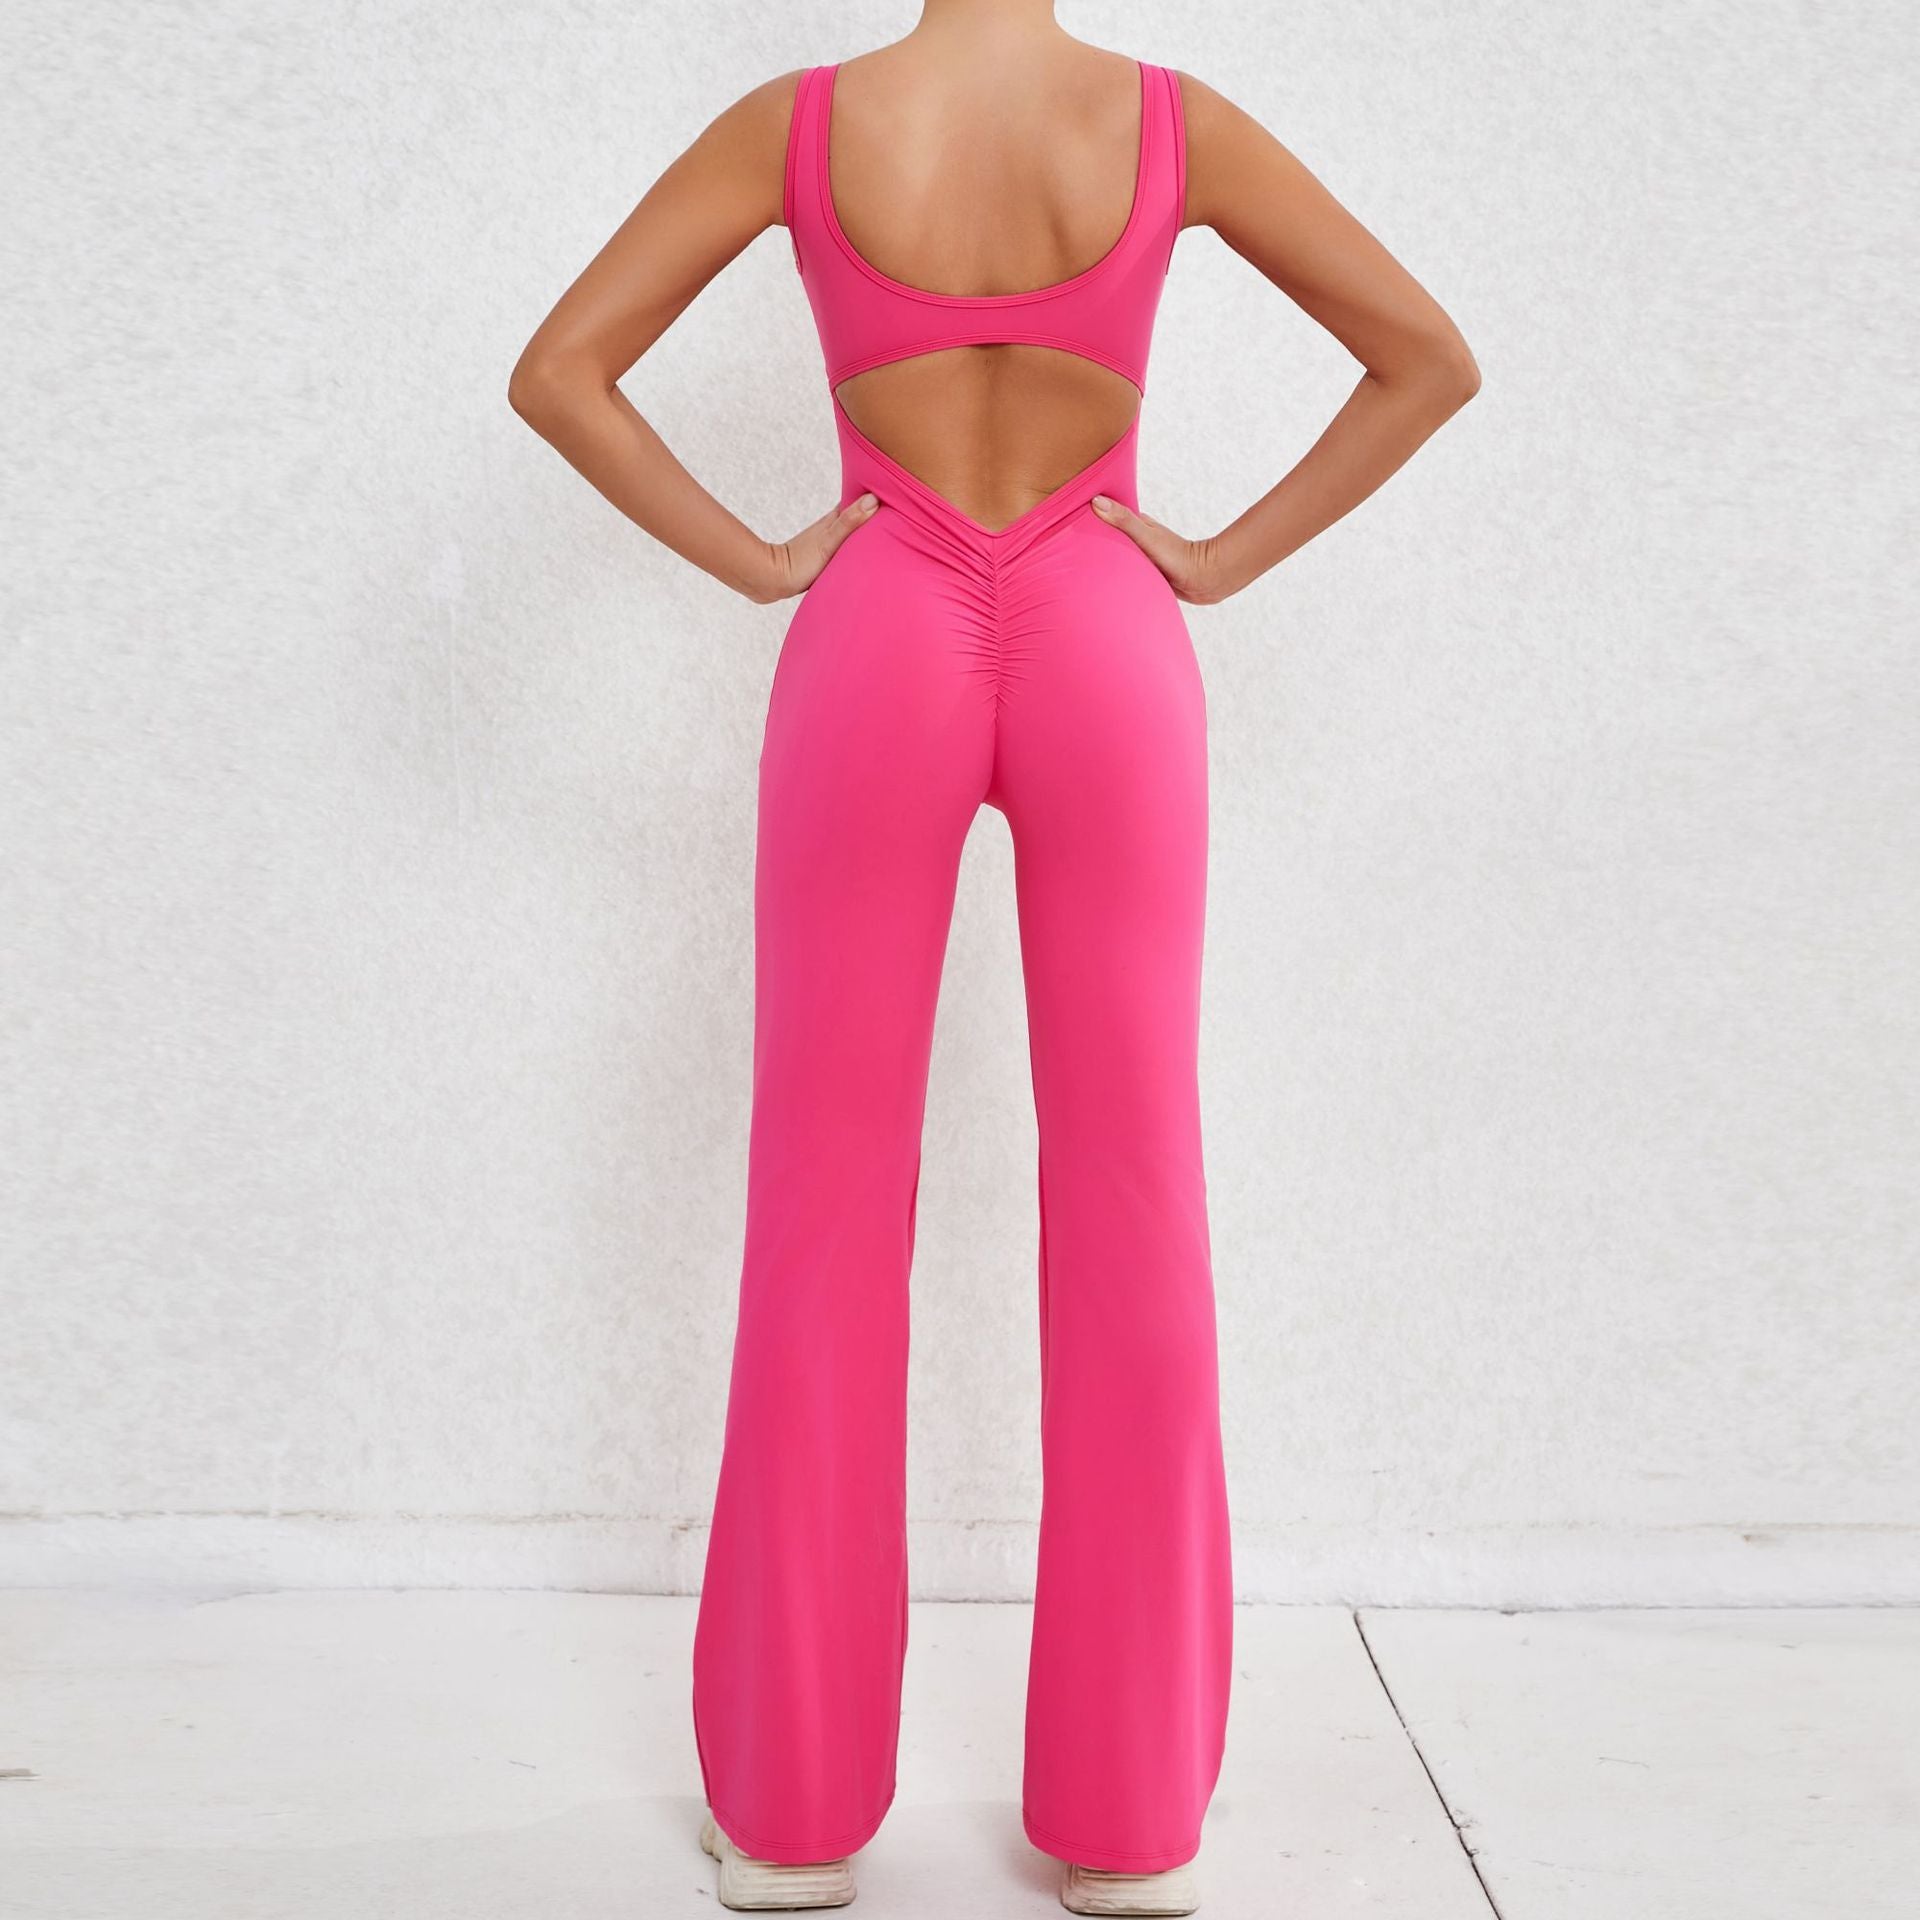 Alexa peach hip yoga-suit